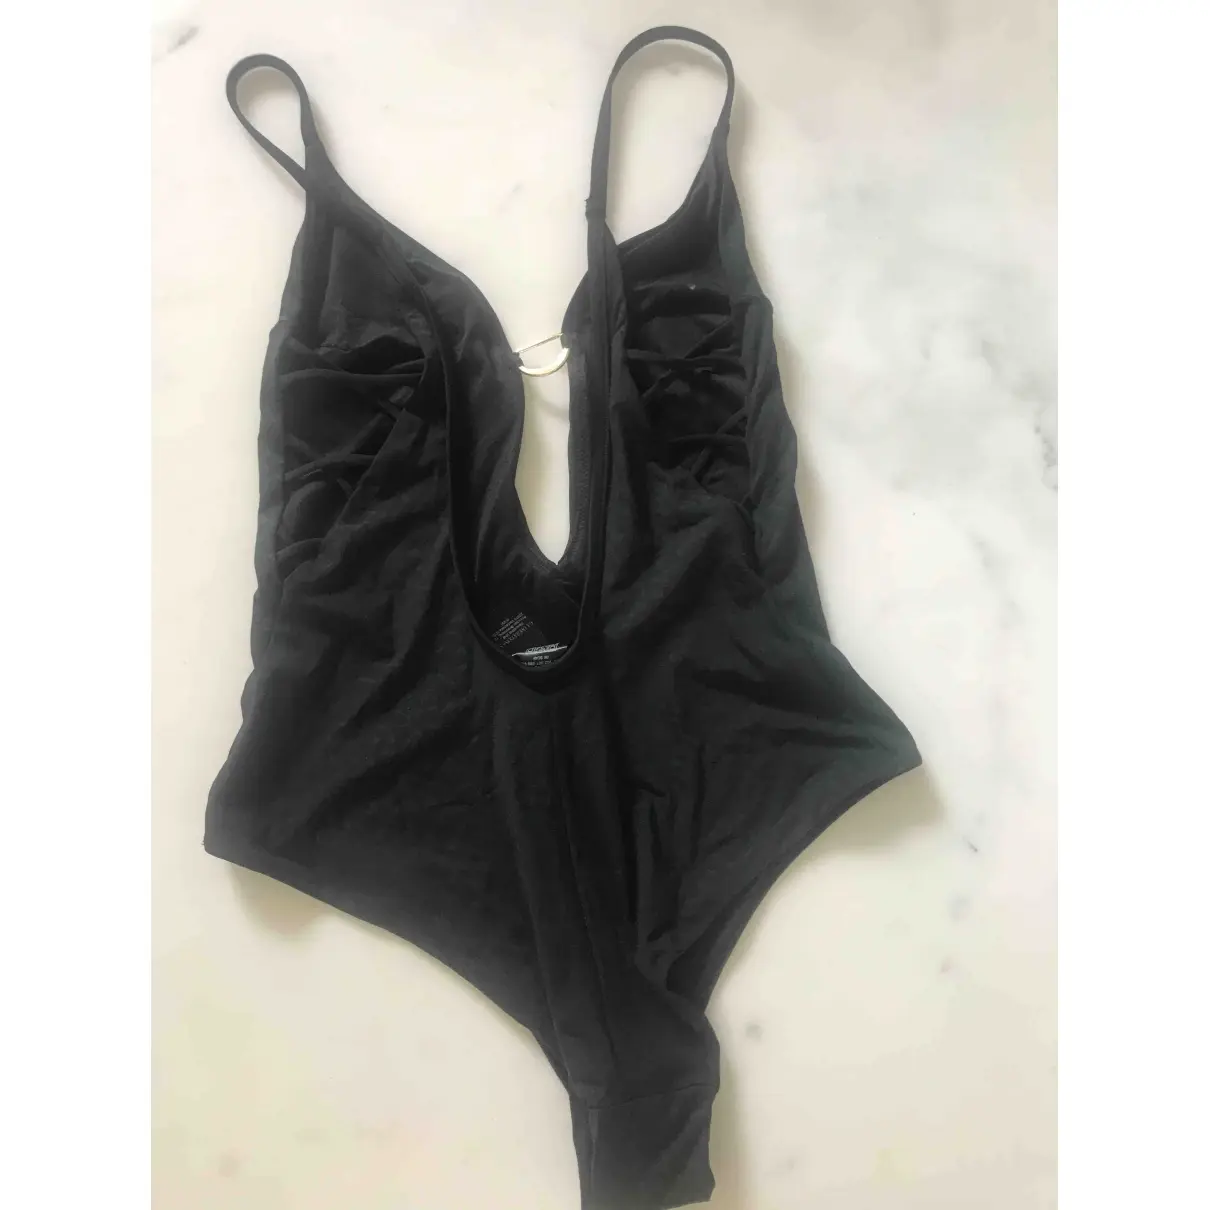 Buy Emporio Armani One-piece swimsuit online